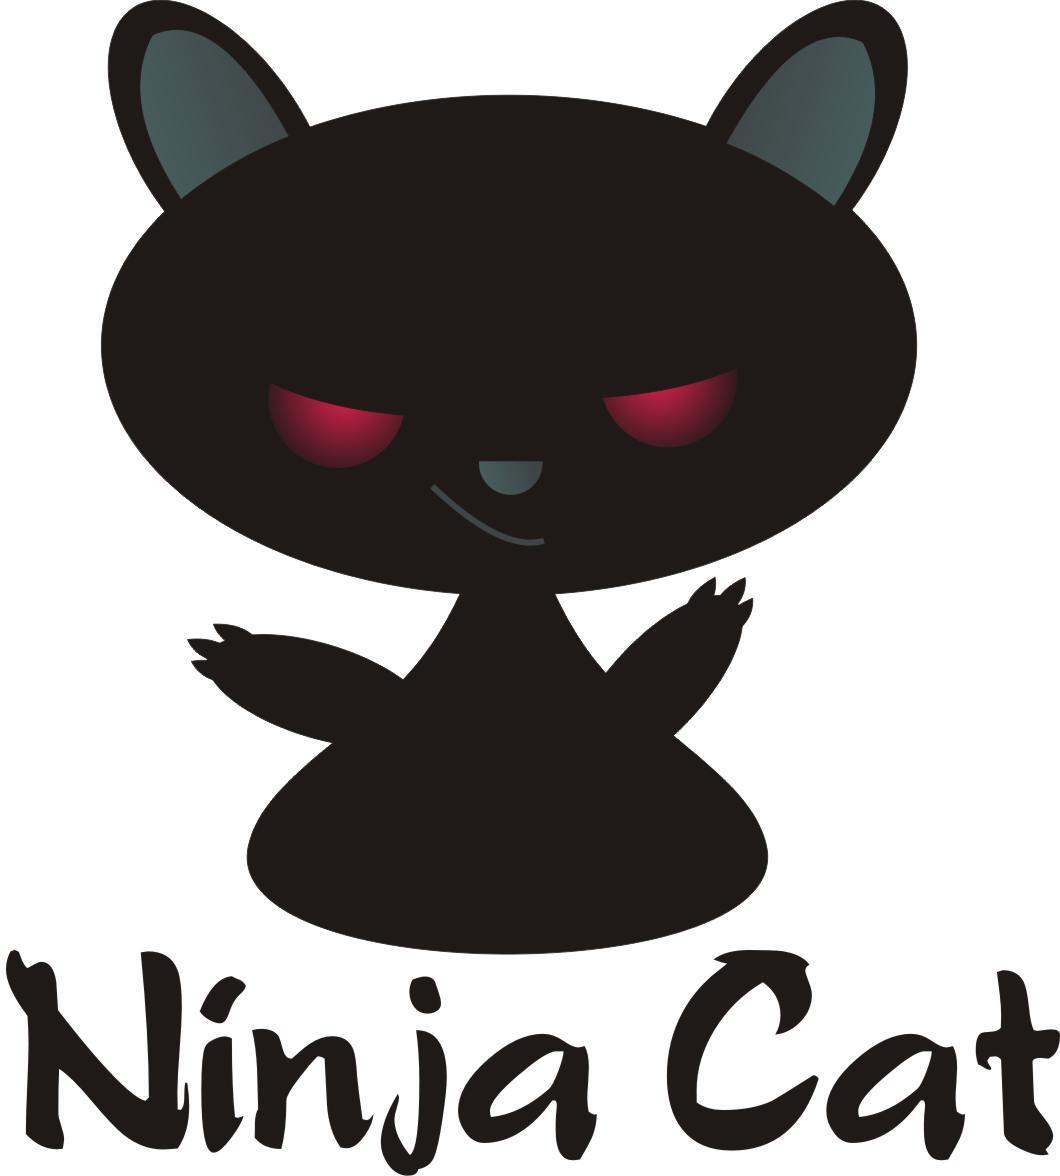 hata4 sites cat ninja